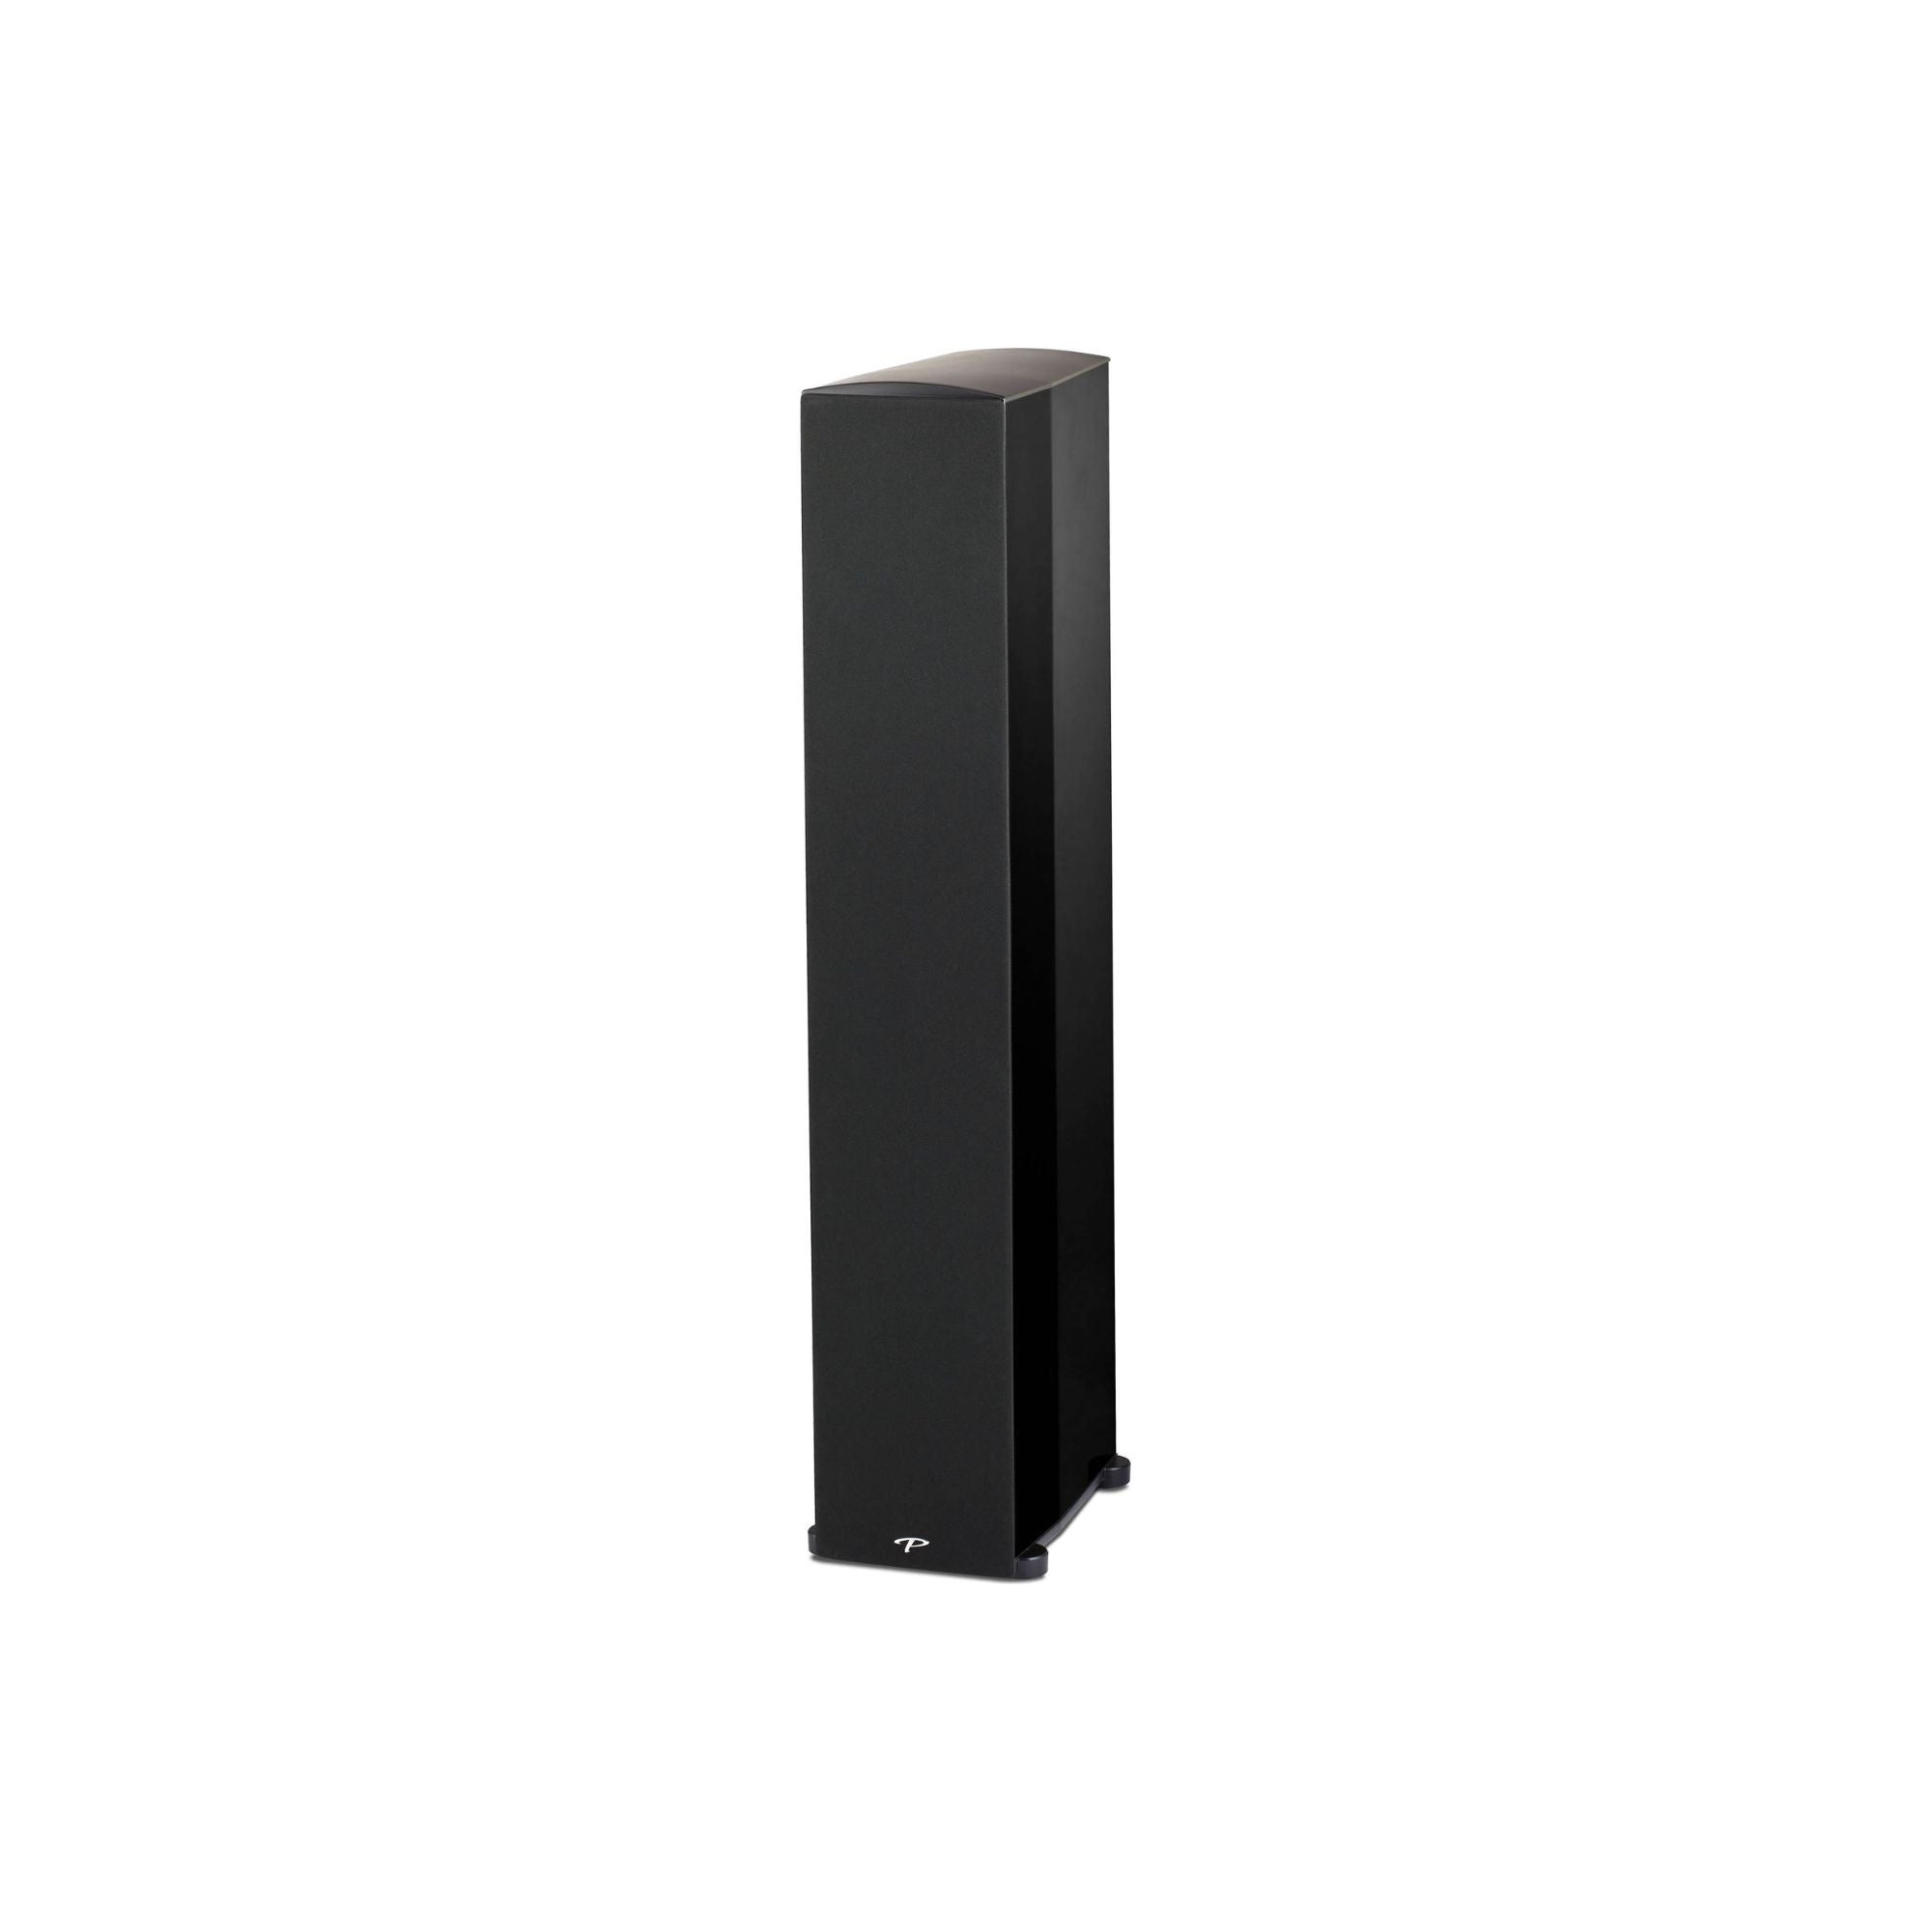 Paradigm Premier 700F - 4-driver, 3-way bass reflex floorstanding, Paradigm, Floor Standing Speaker - AVStore.in